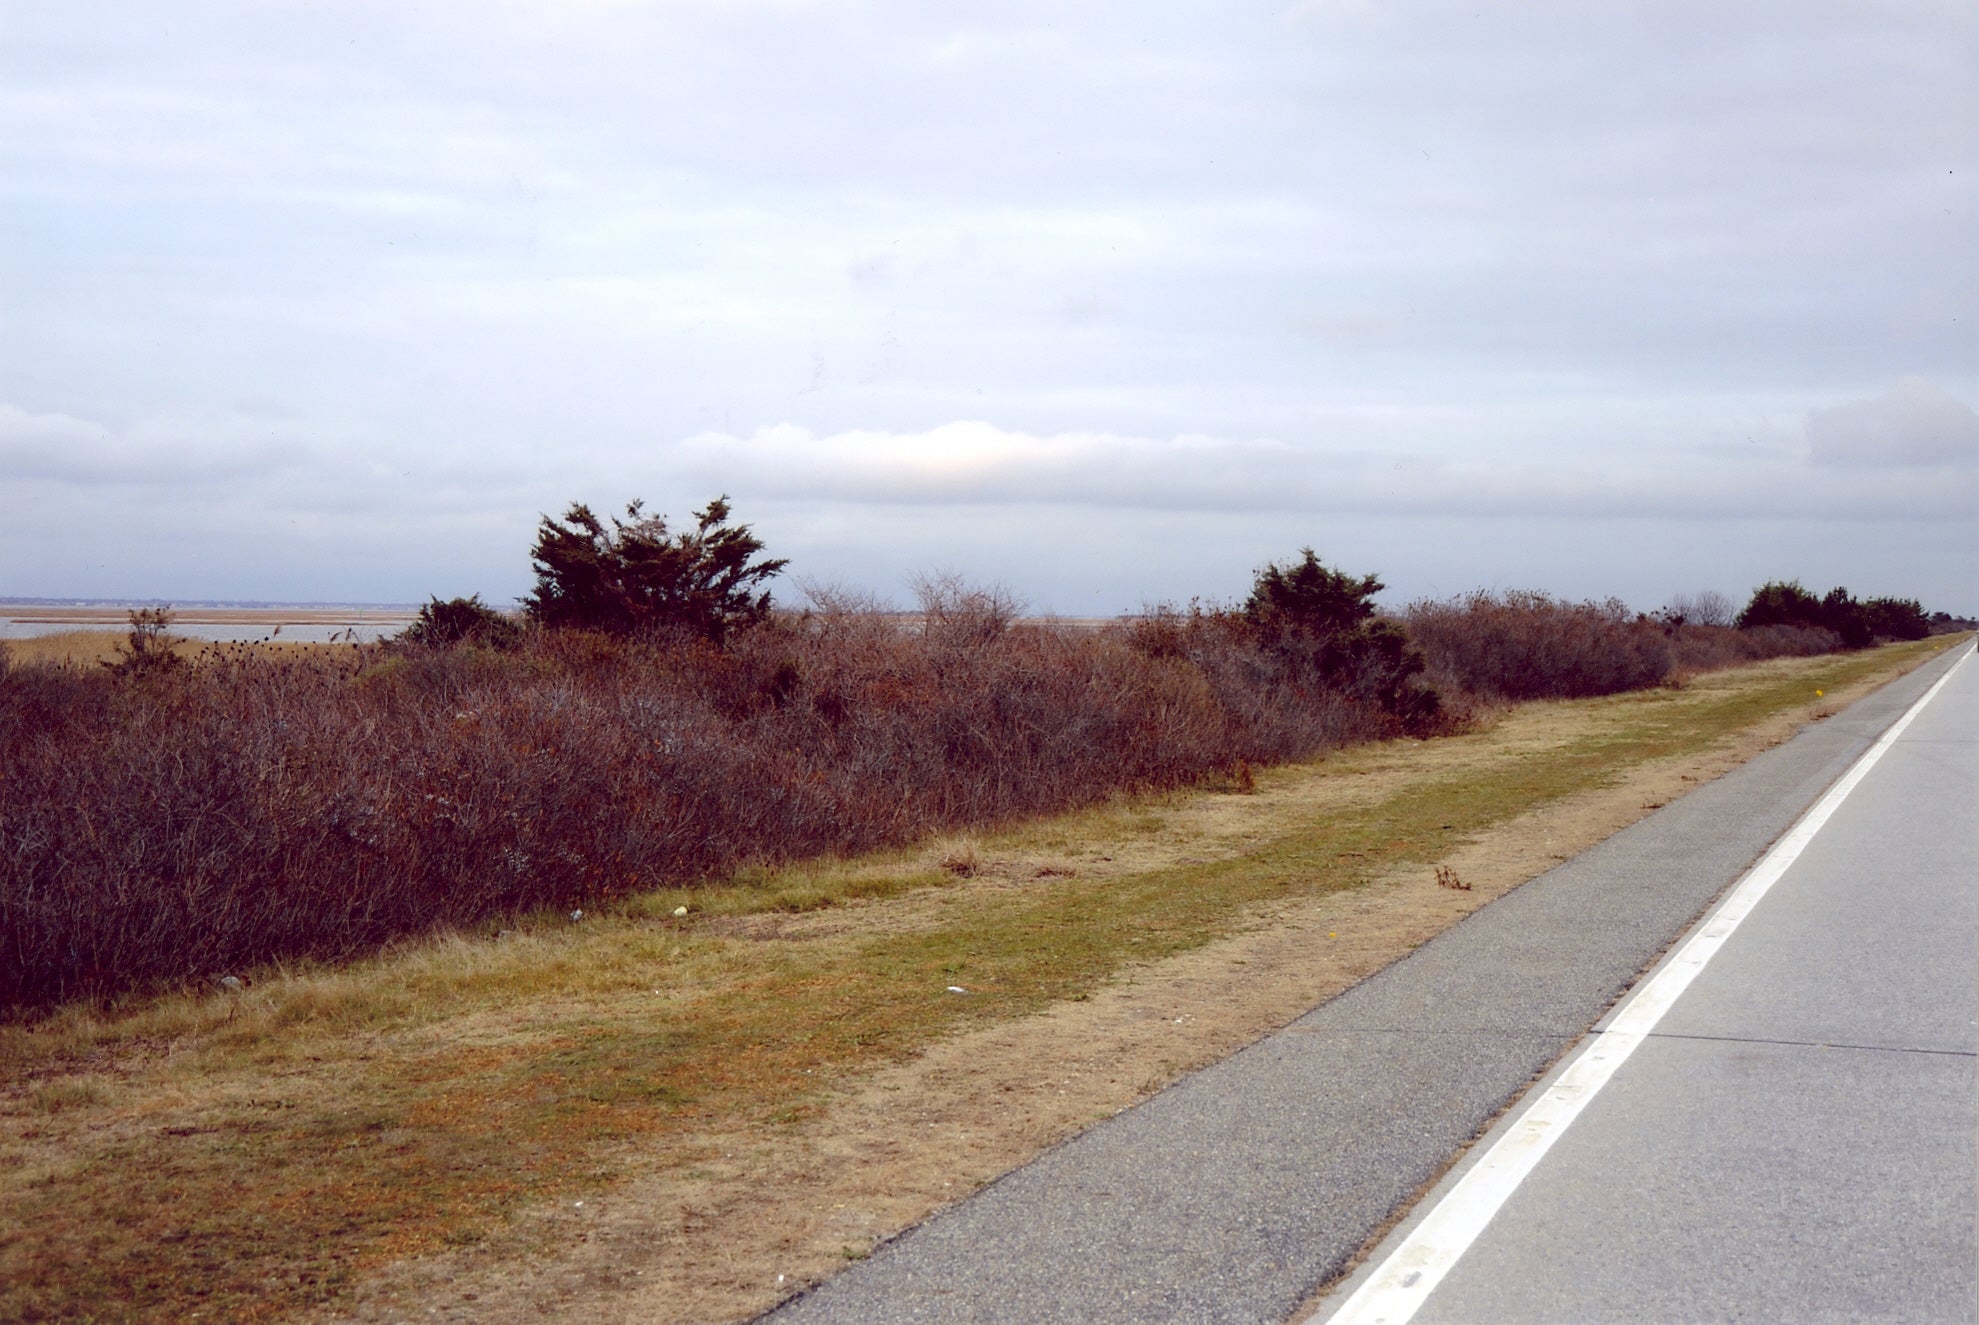 The site along Ocean Parkway where Maureen Brainard-Barnes’ remains were found